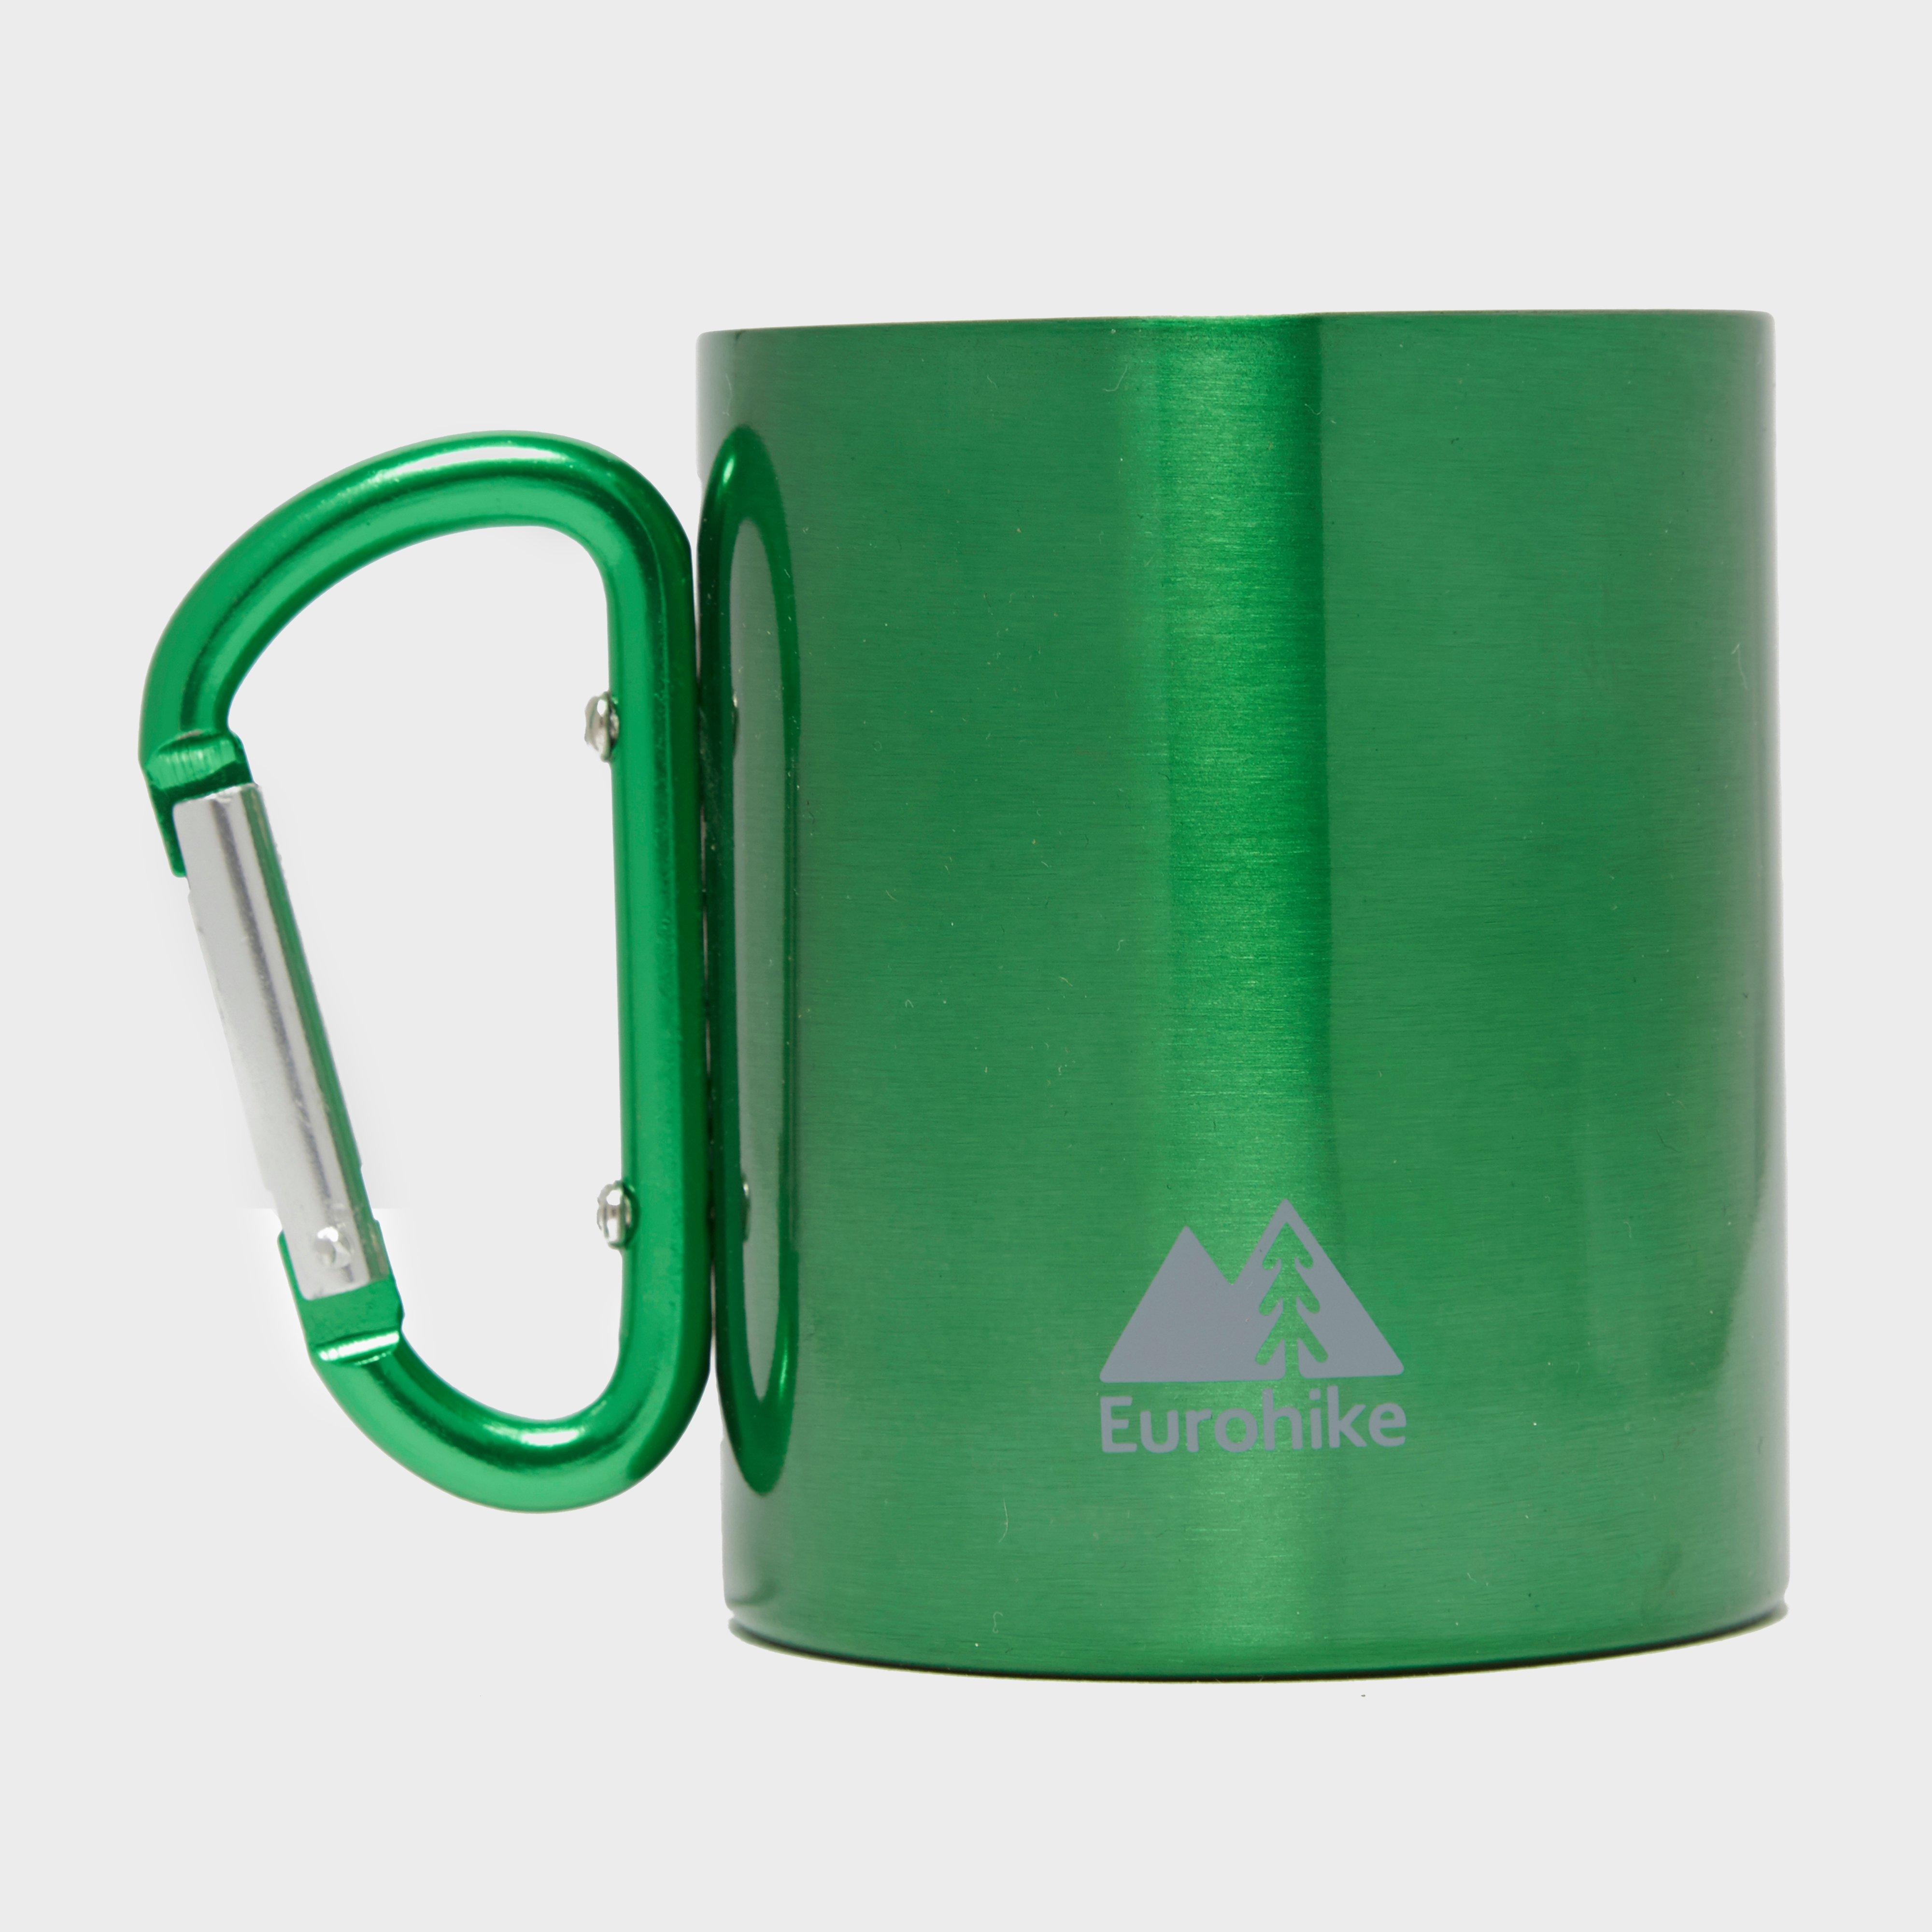 Eurohike Carabiner Mug  Green